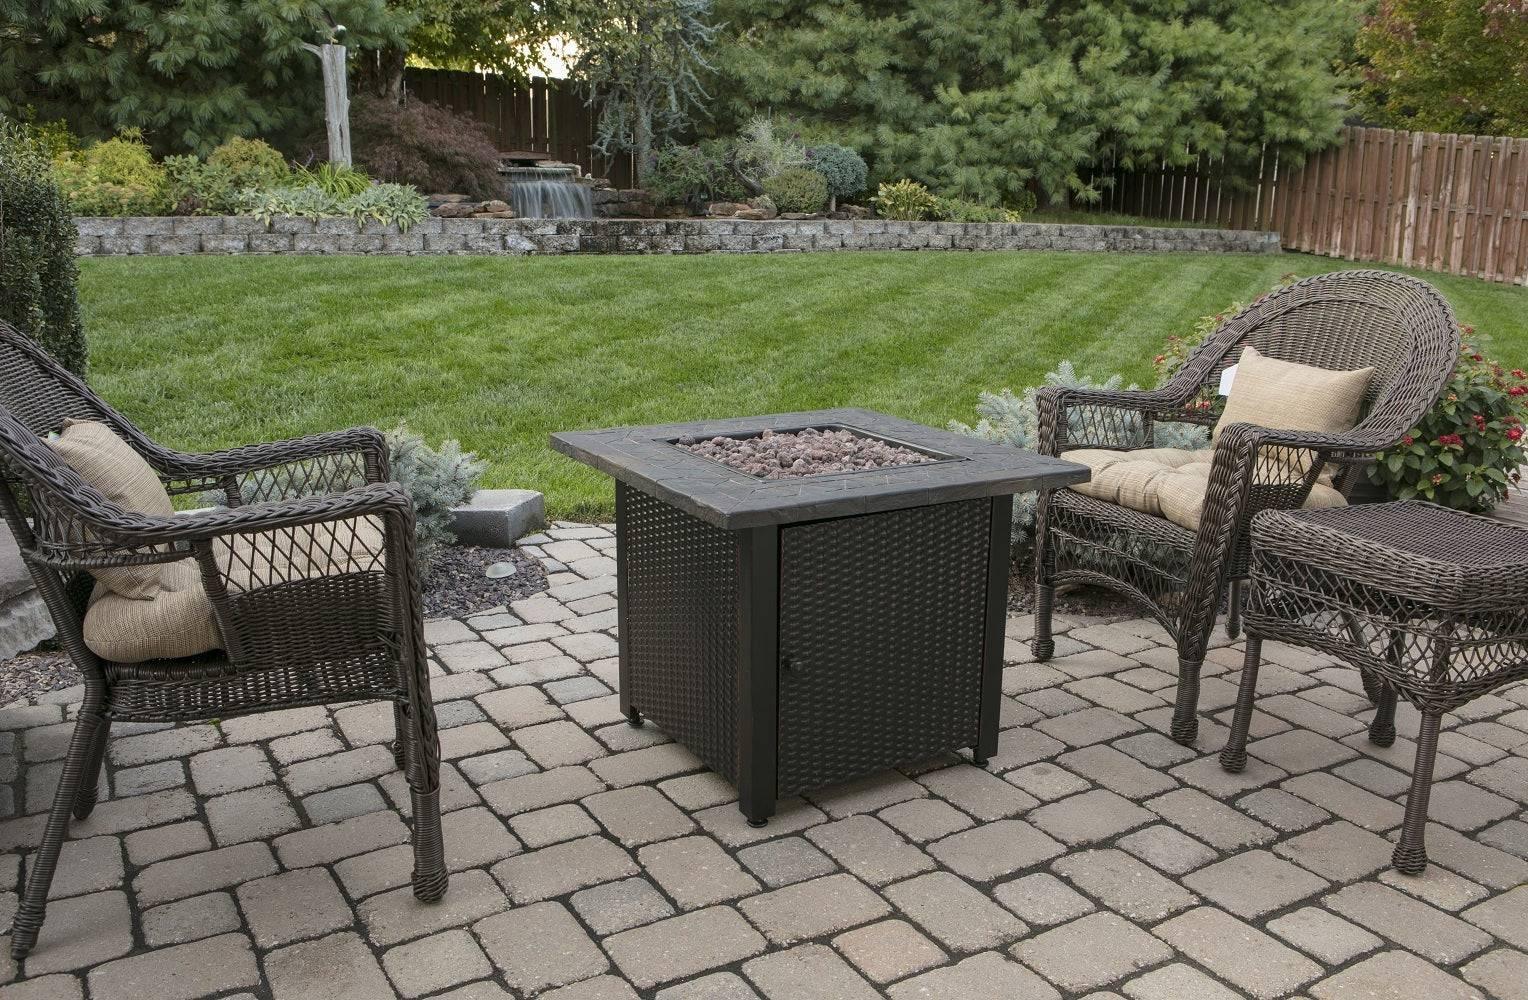 Endless Summer 30" Resin Tile Mantel Propane Outdoor Fire Pit Table - Kozy Korner Fire Pits